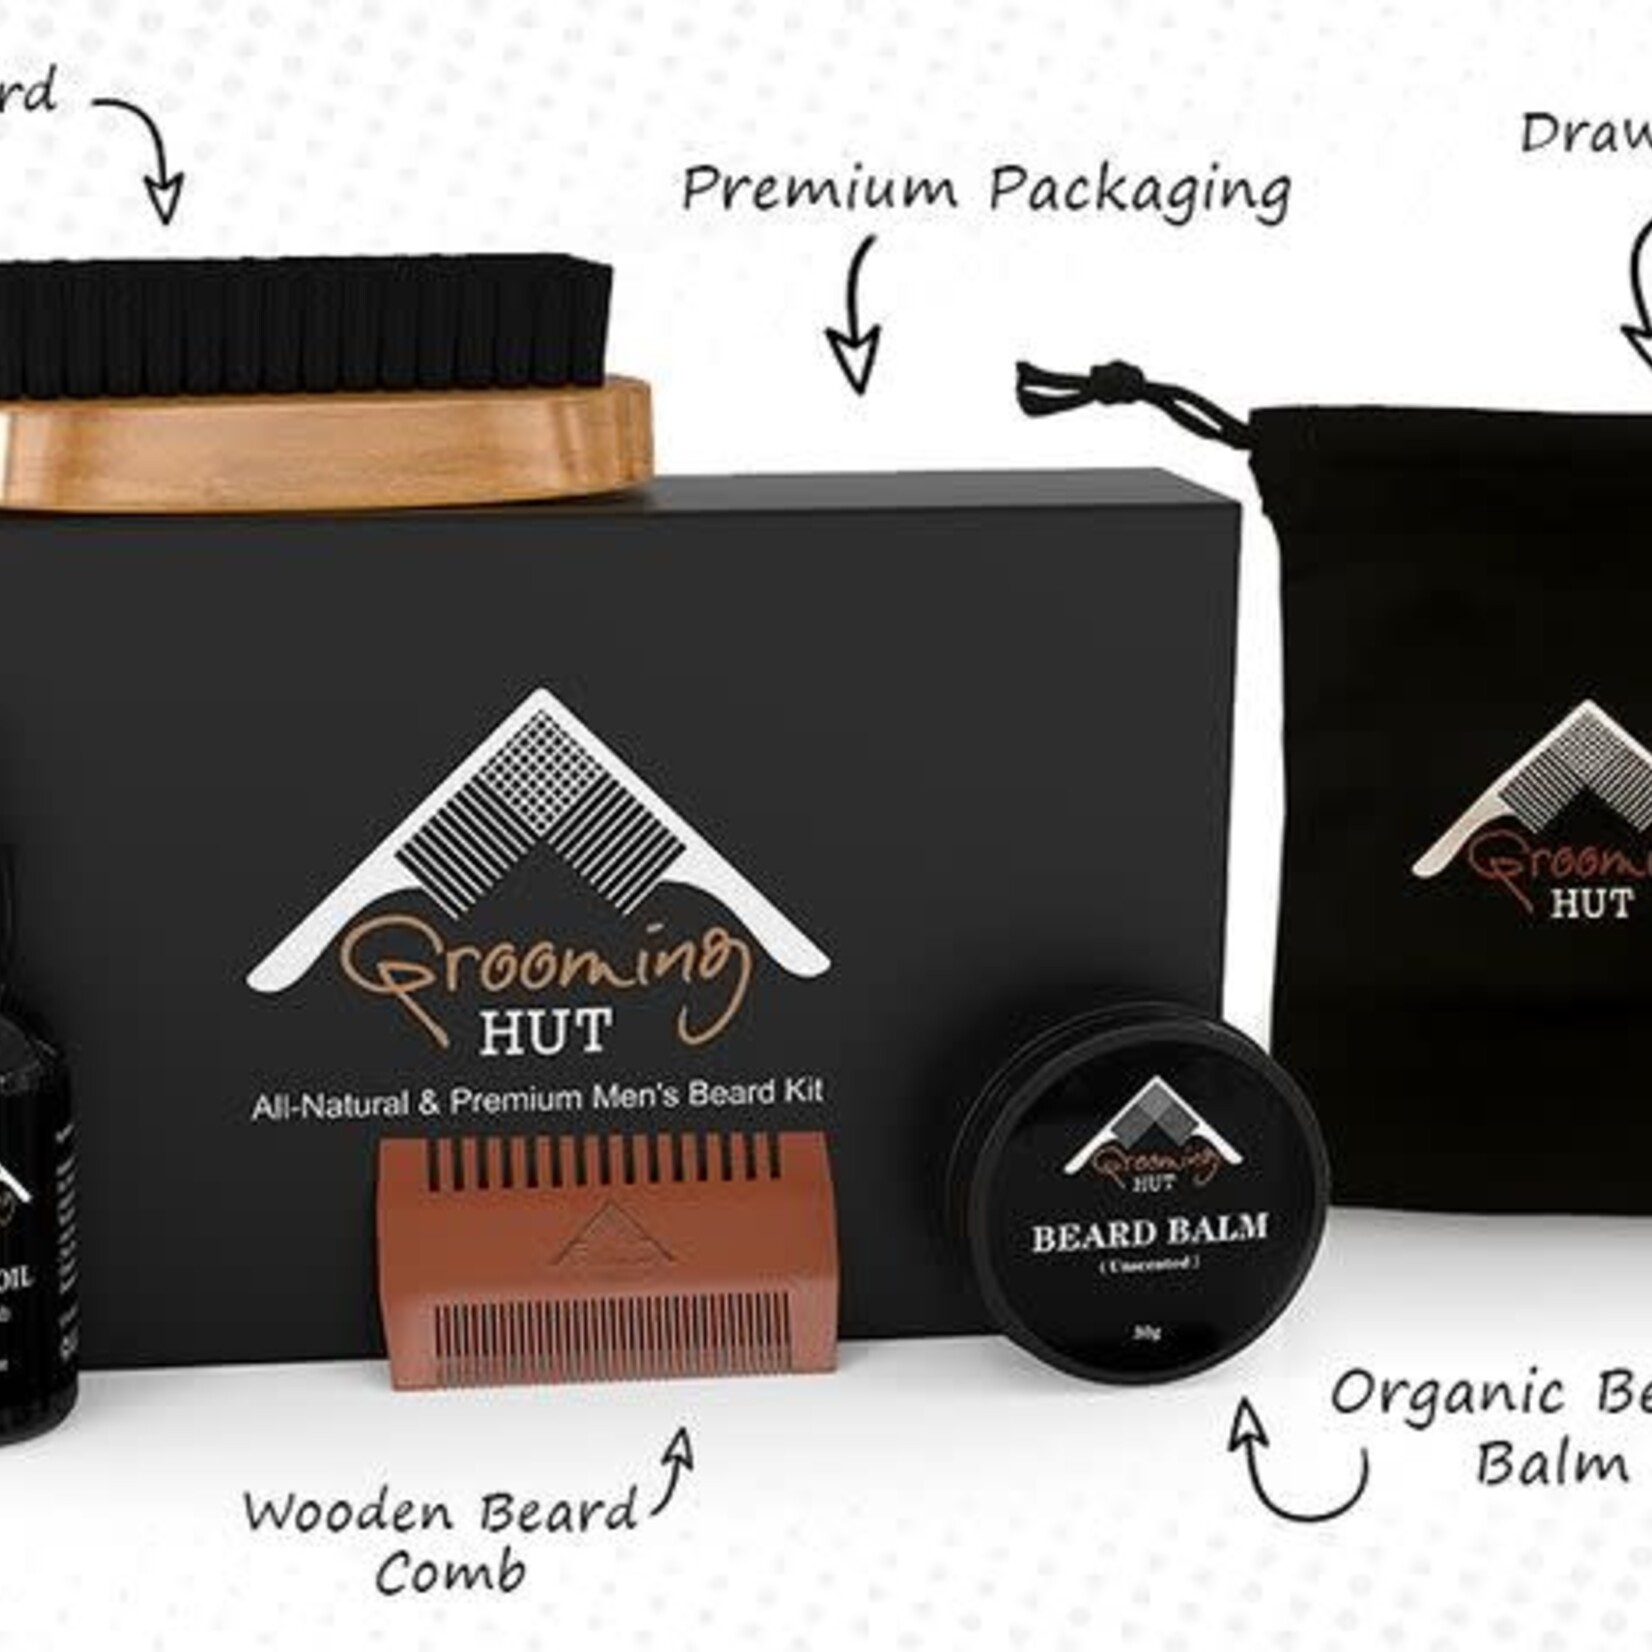 Grooming Hut Organic Beard Kit